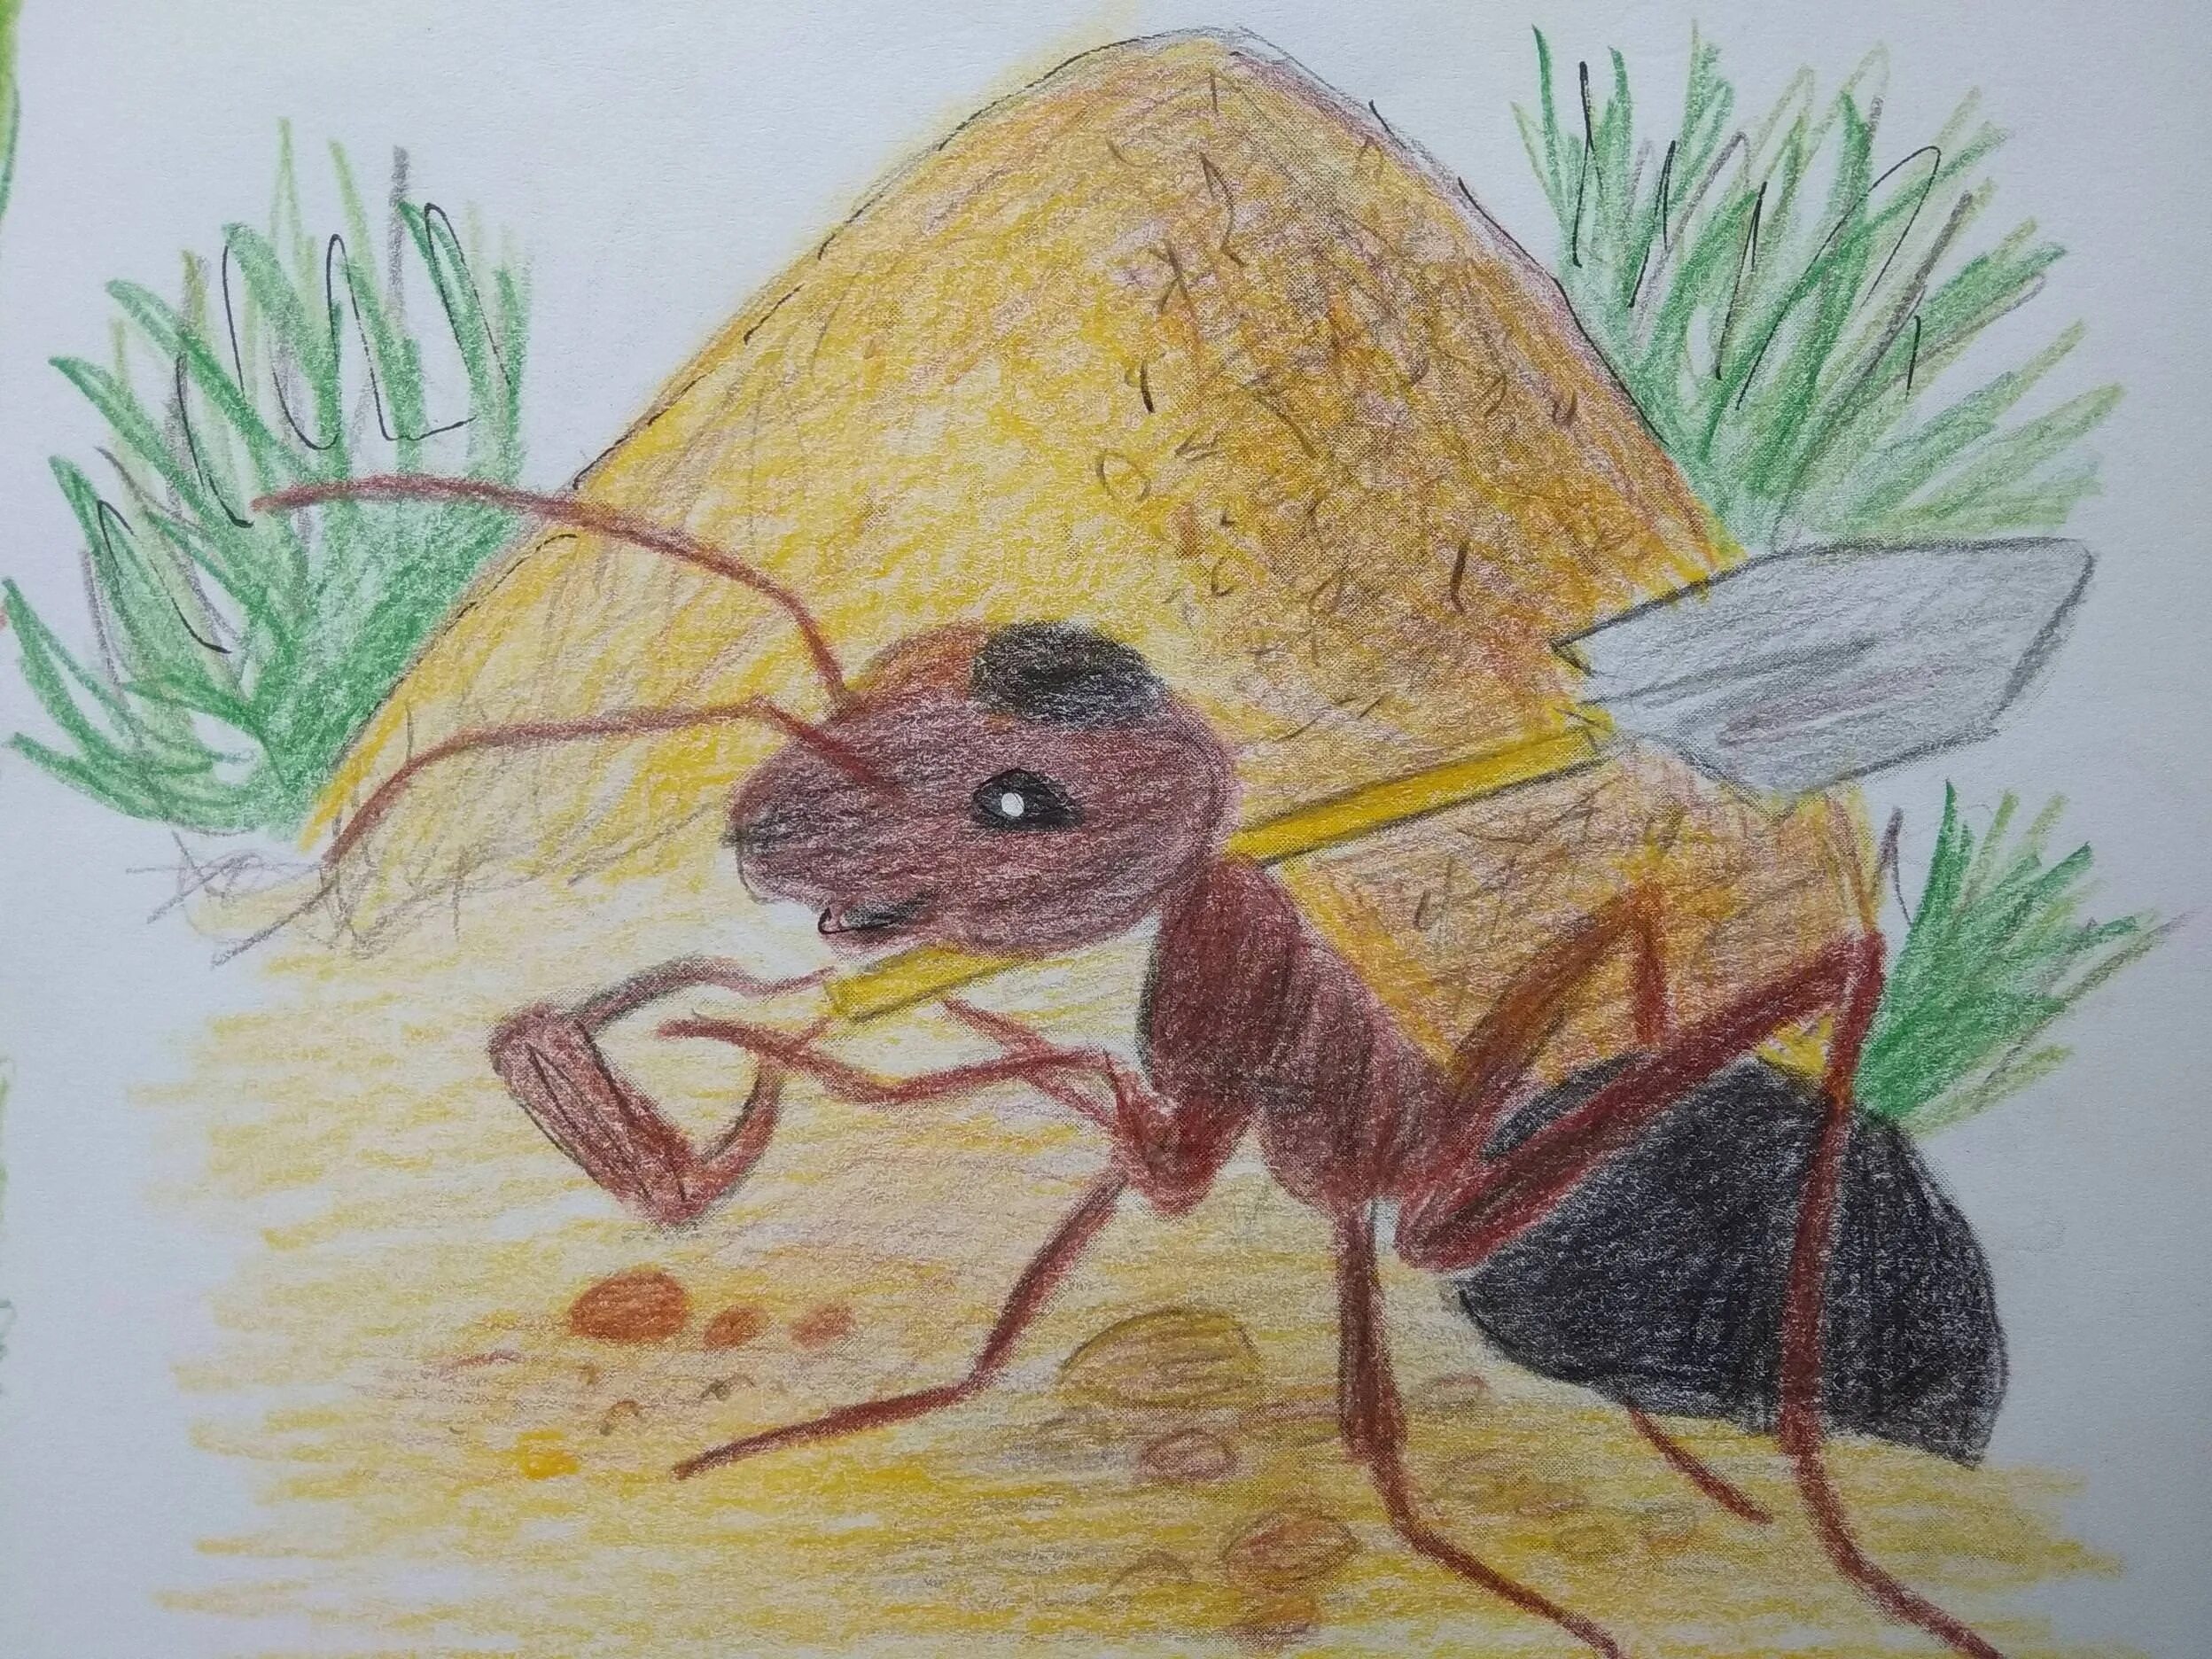 Муравей Муравейник муравьишка. Муравей рисунок. Муравей рисунок для детей. Муравей картинка для детей. Как муравьишка домой спешил герои